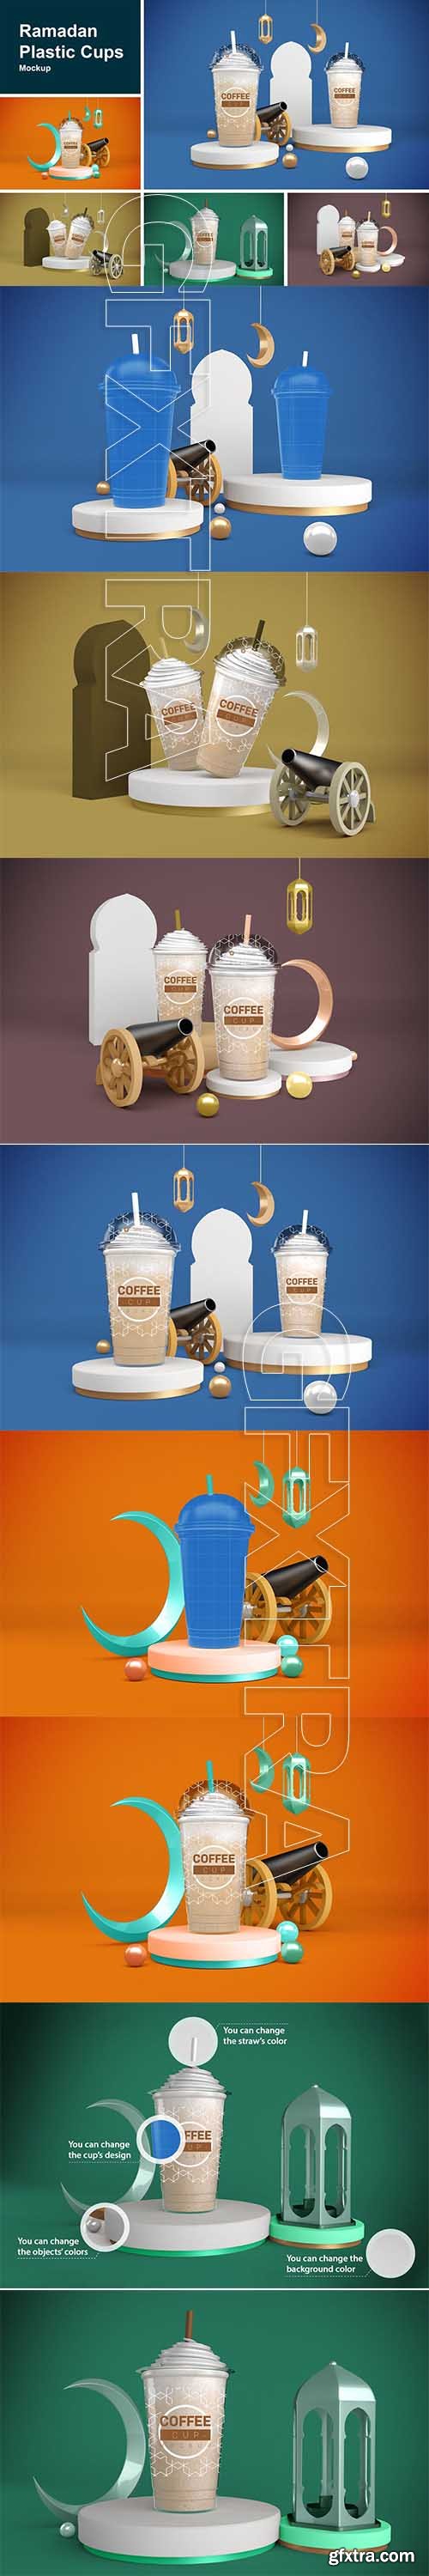 Ramadan Plastic Cups